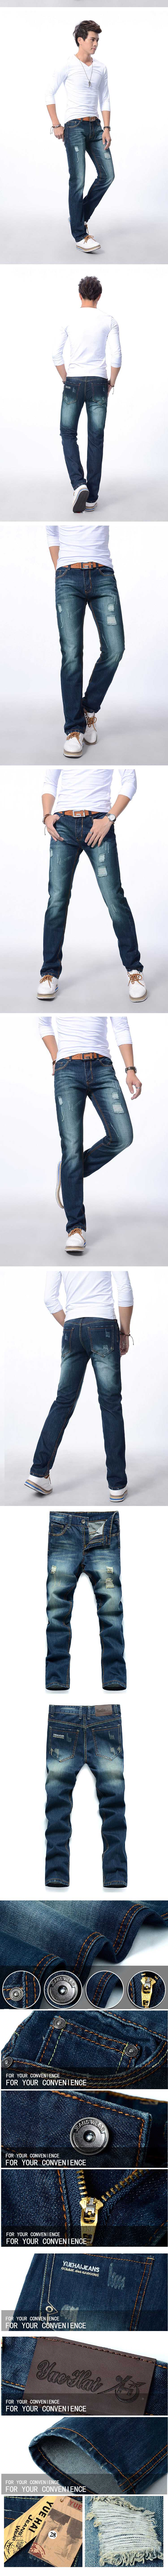 cari celana pria jeans pria model robek? klik dan pesan segera disini, pfp mempunyai ratusan model celana jeans pria keren model terbaru dengan harga murah.